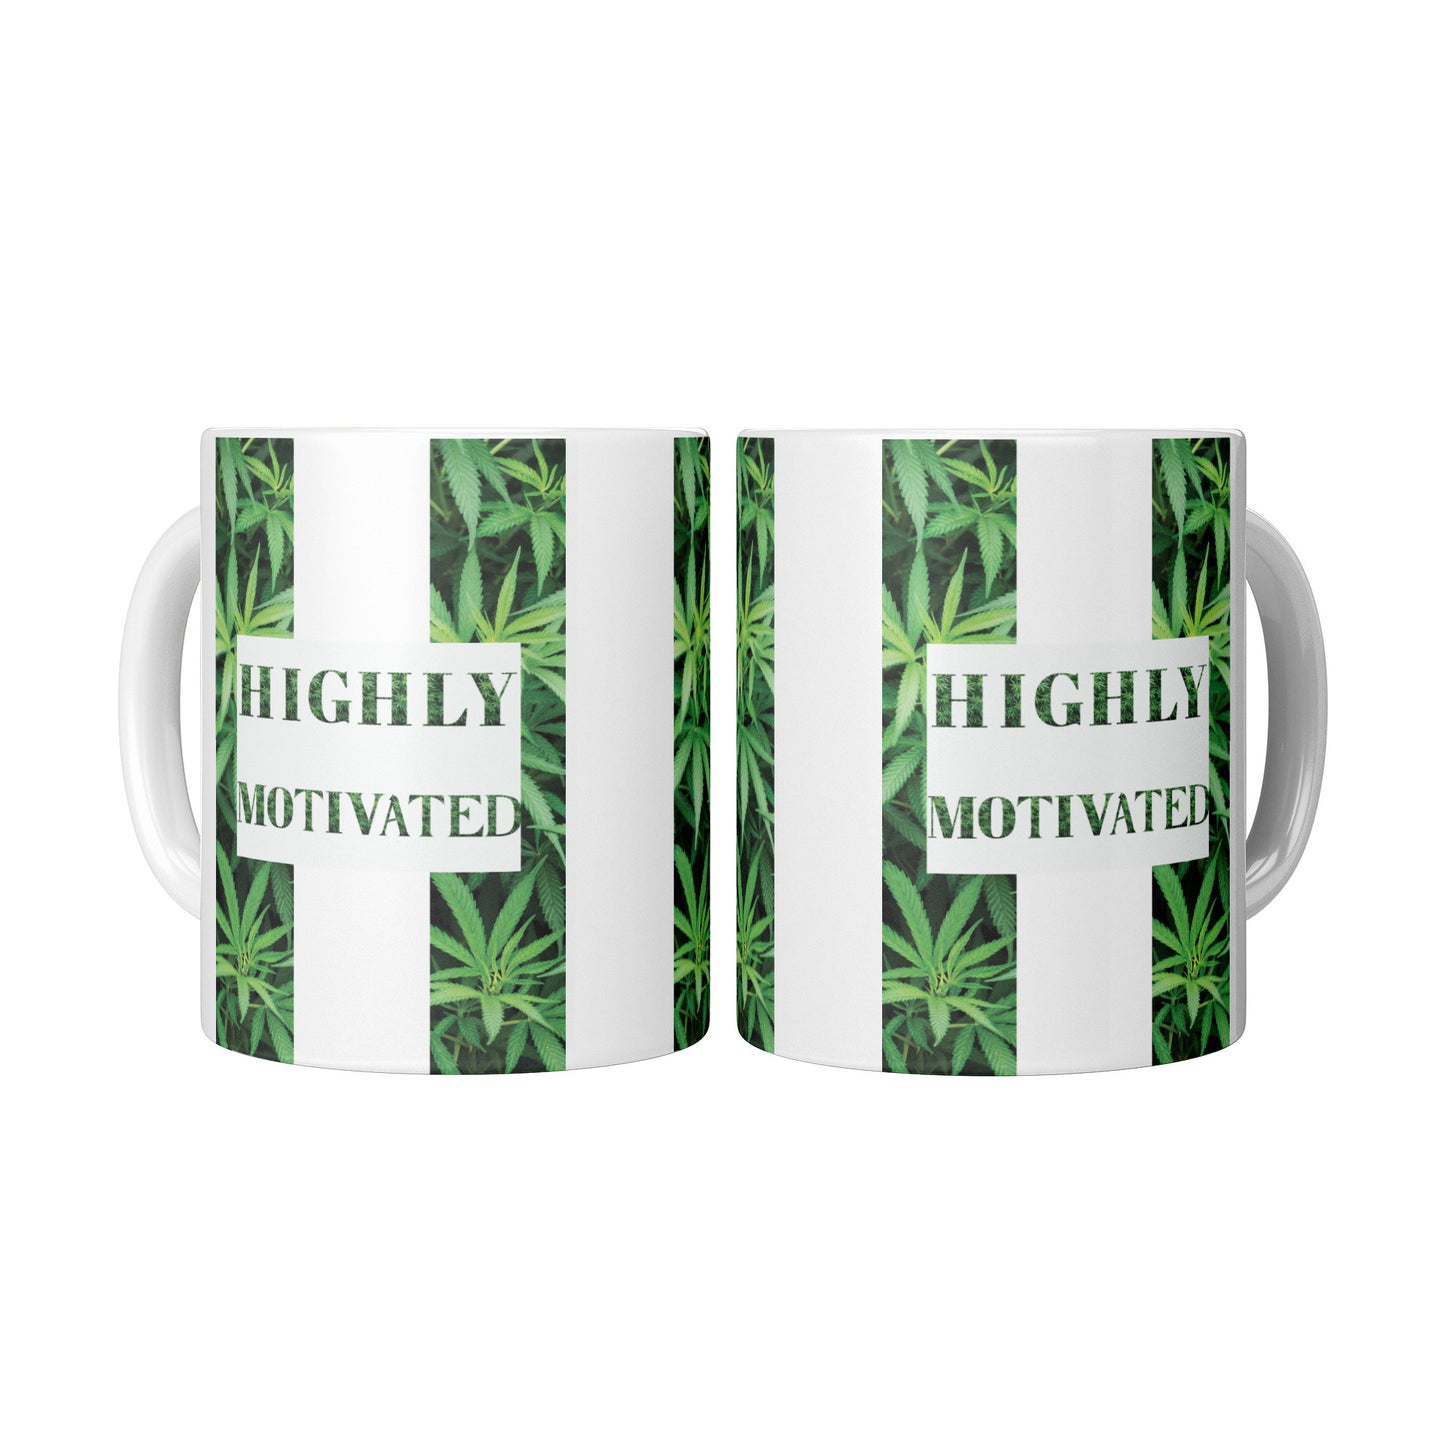 Highly Motivated Cannabis Inspired Mug